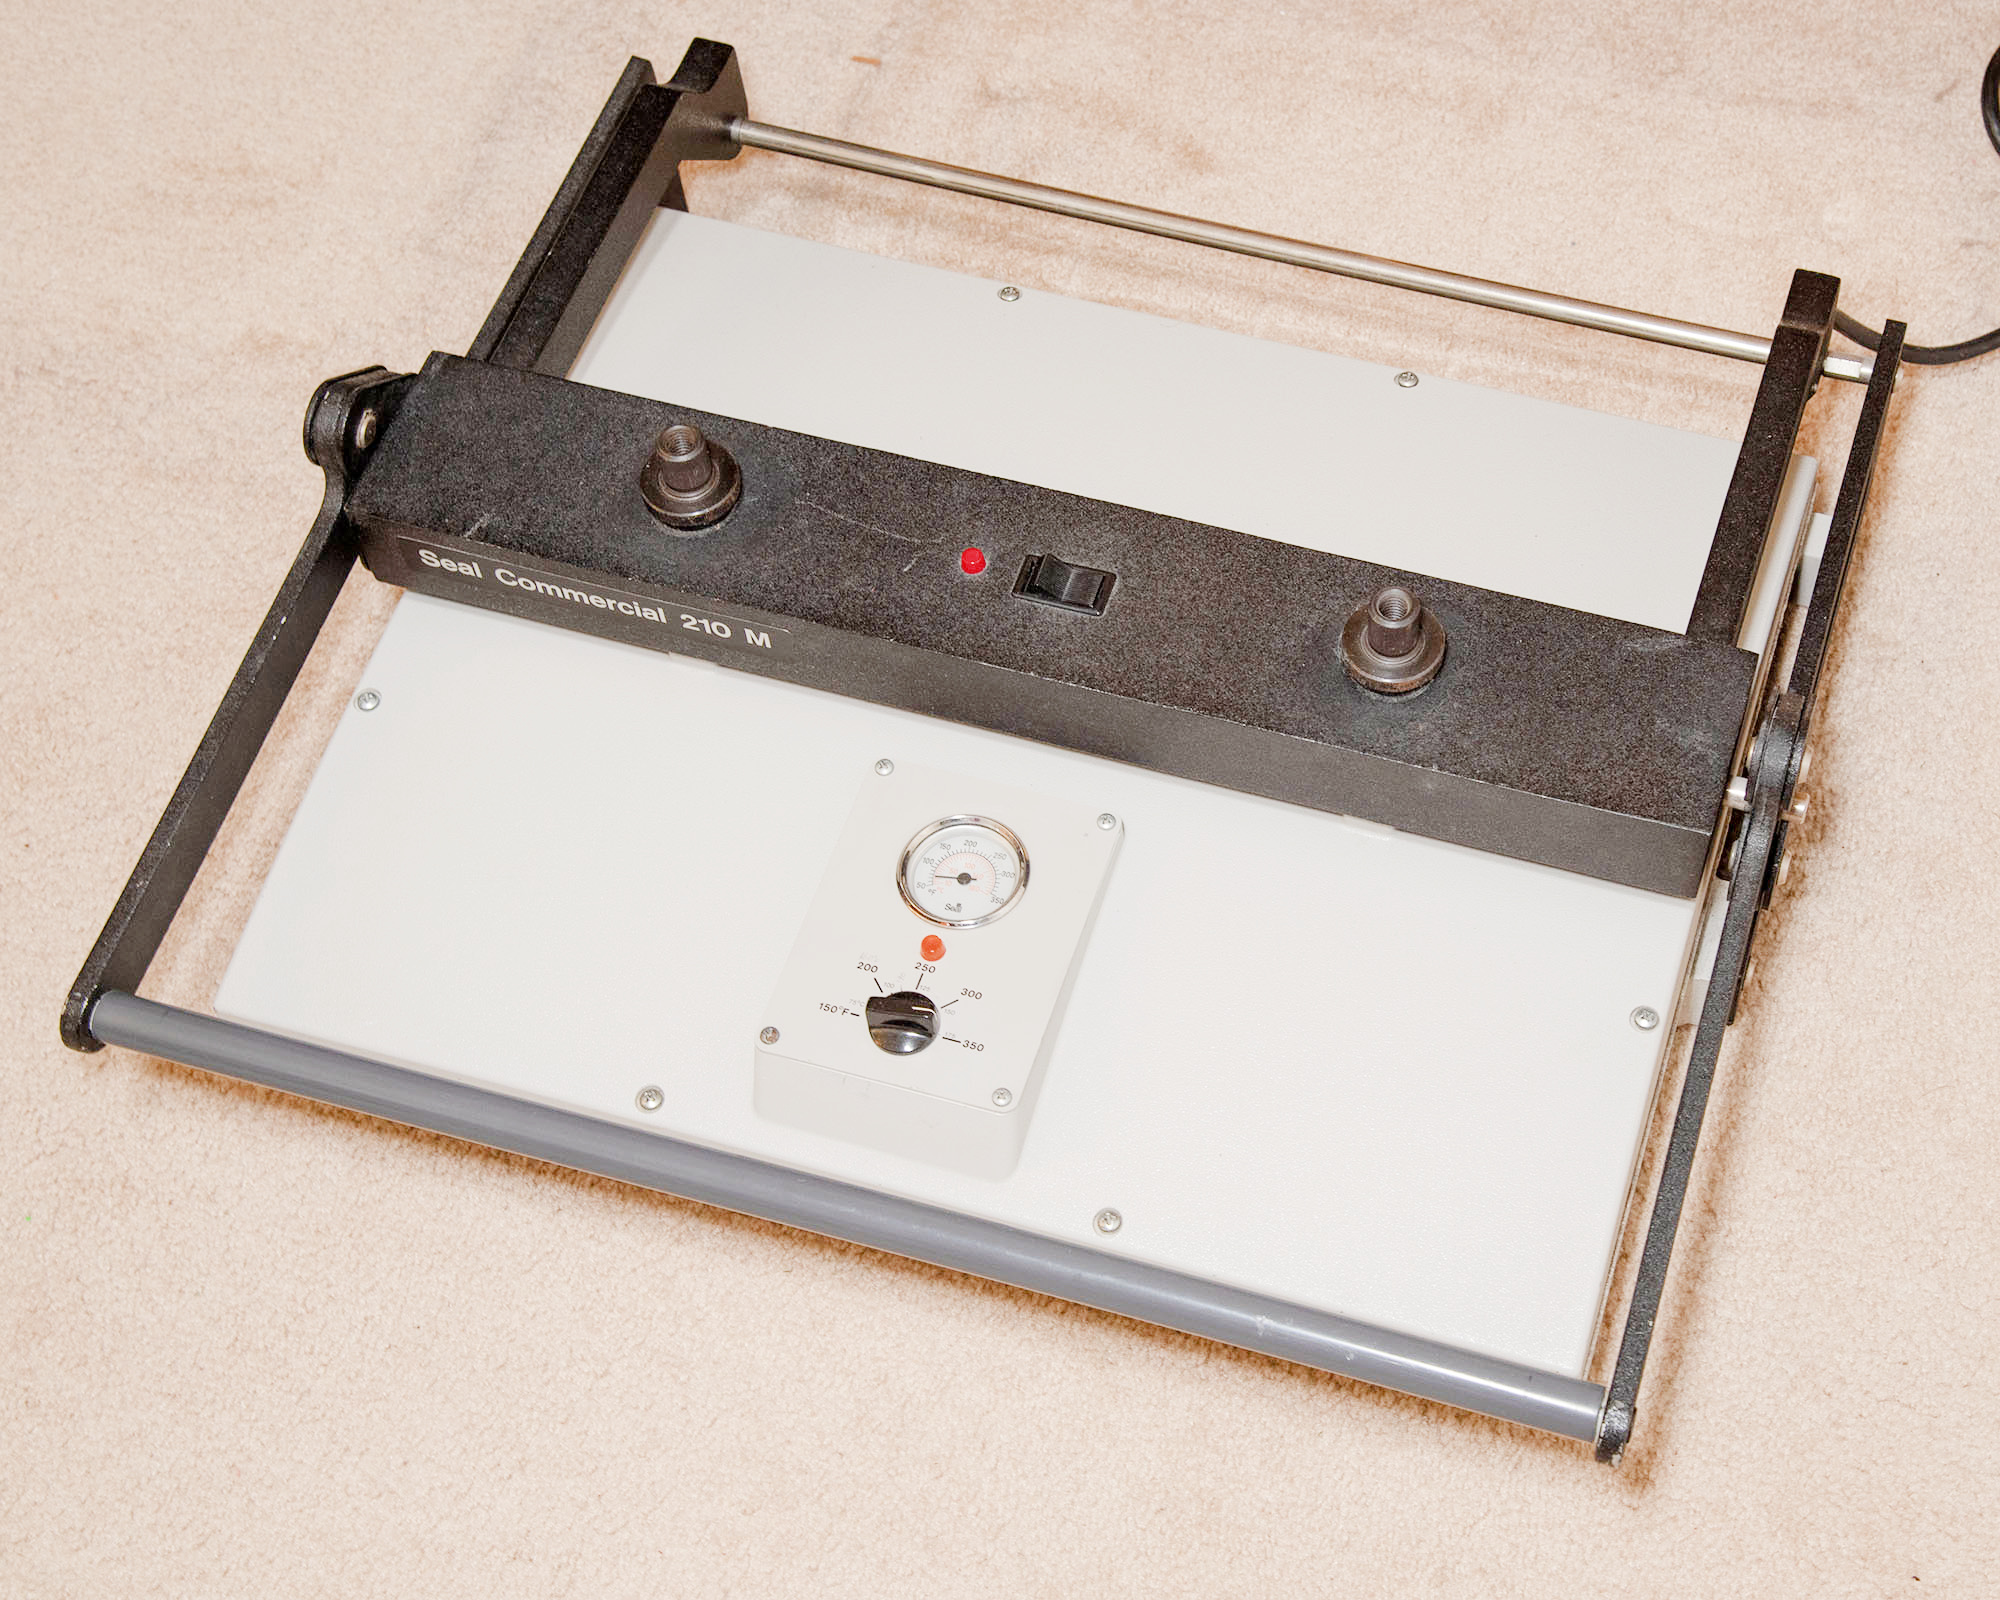 Seal 210M Mechanical Heat Press (used) Item # UE-101521B (Washington)